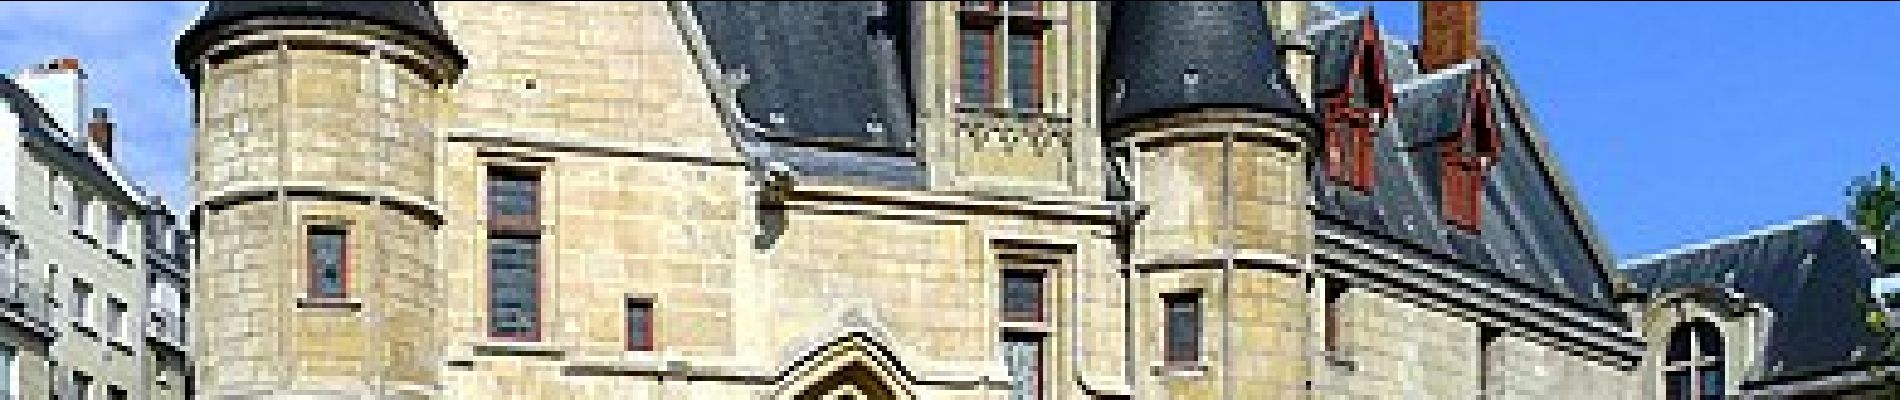 Punto di interesse Parigi - Hotel des archevêques de Sens - Photo